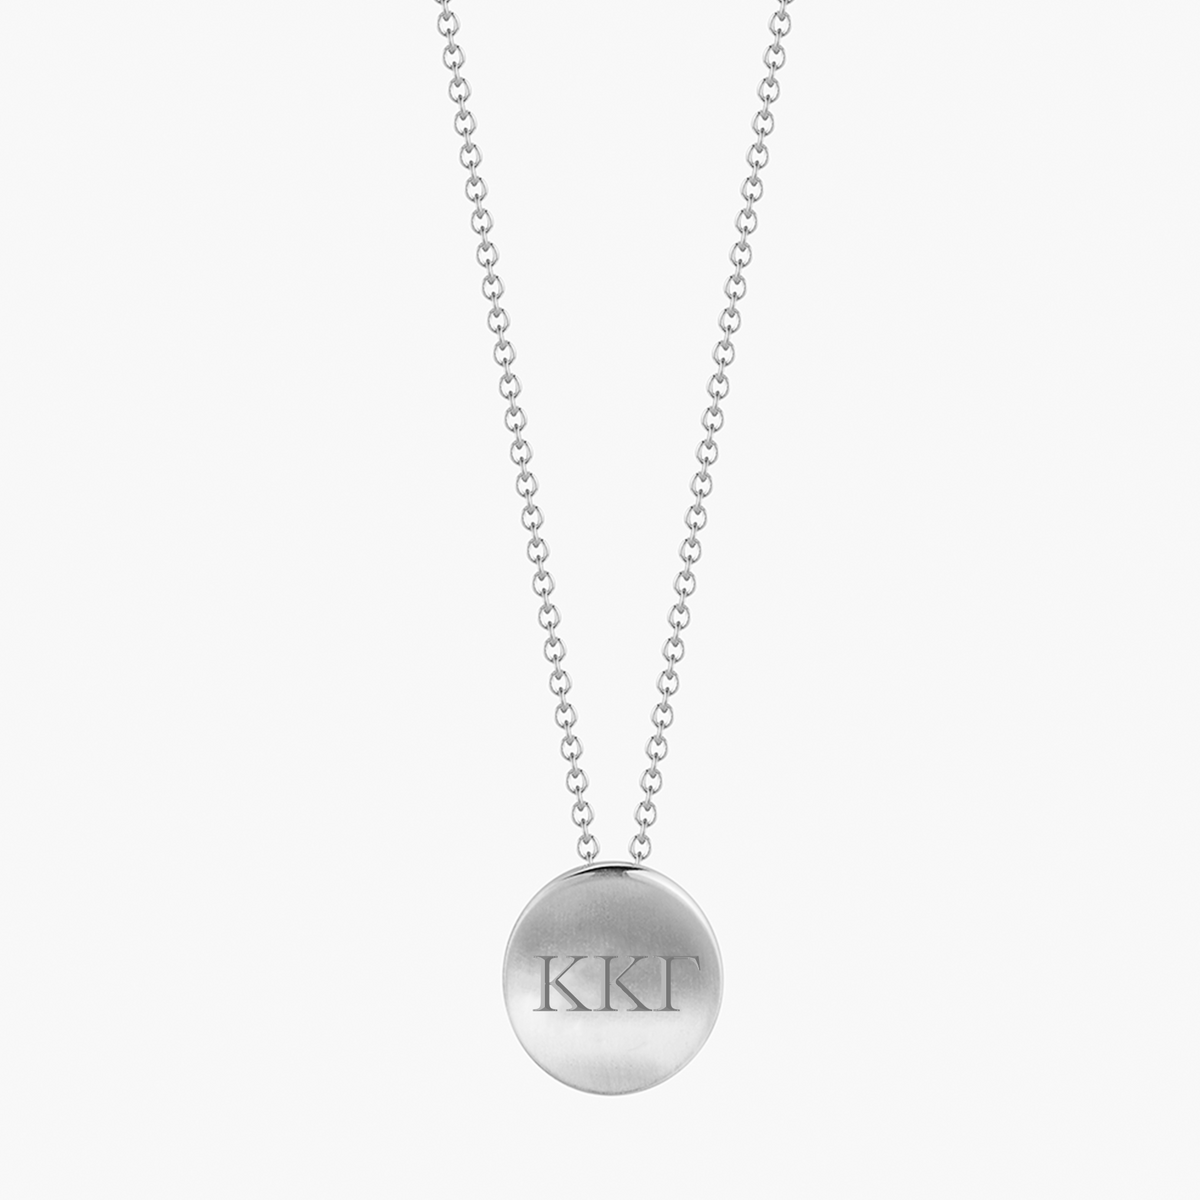 Kappa Kappa Gamma Letters Necklace